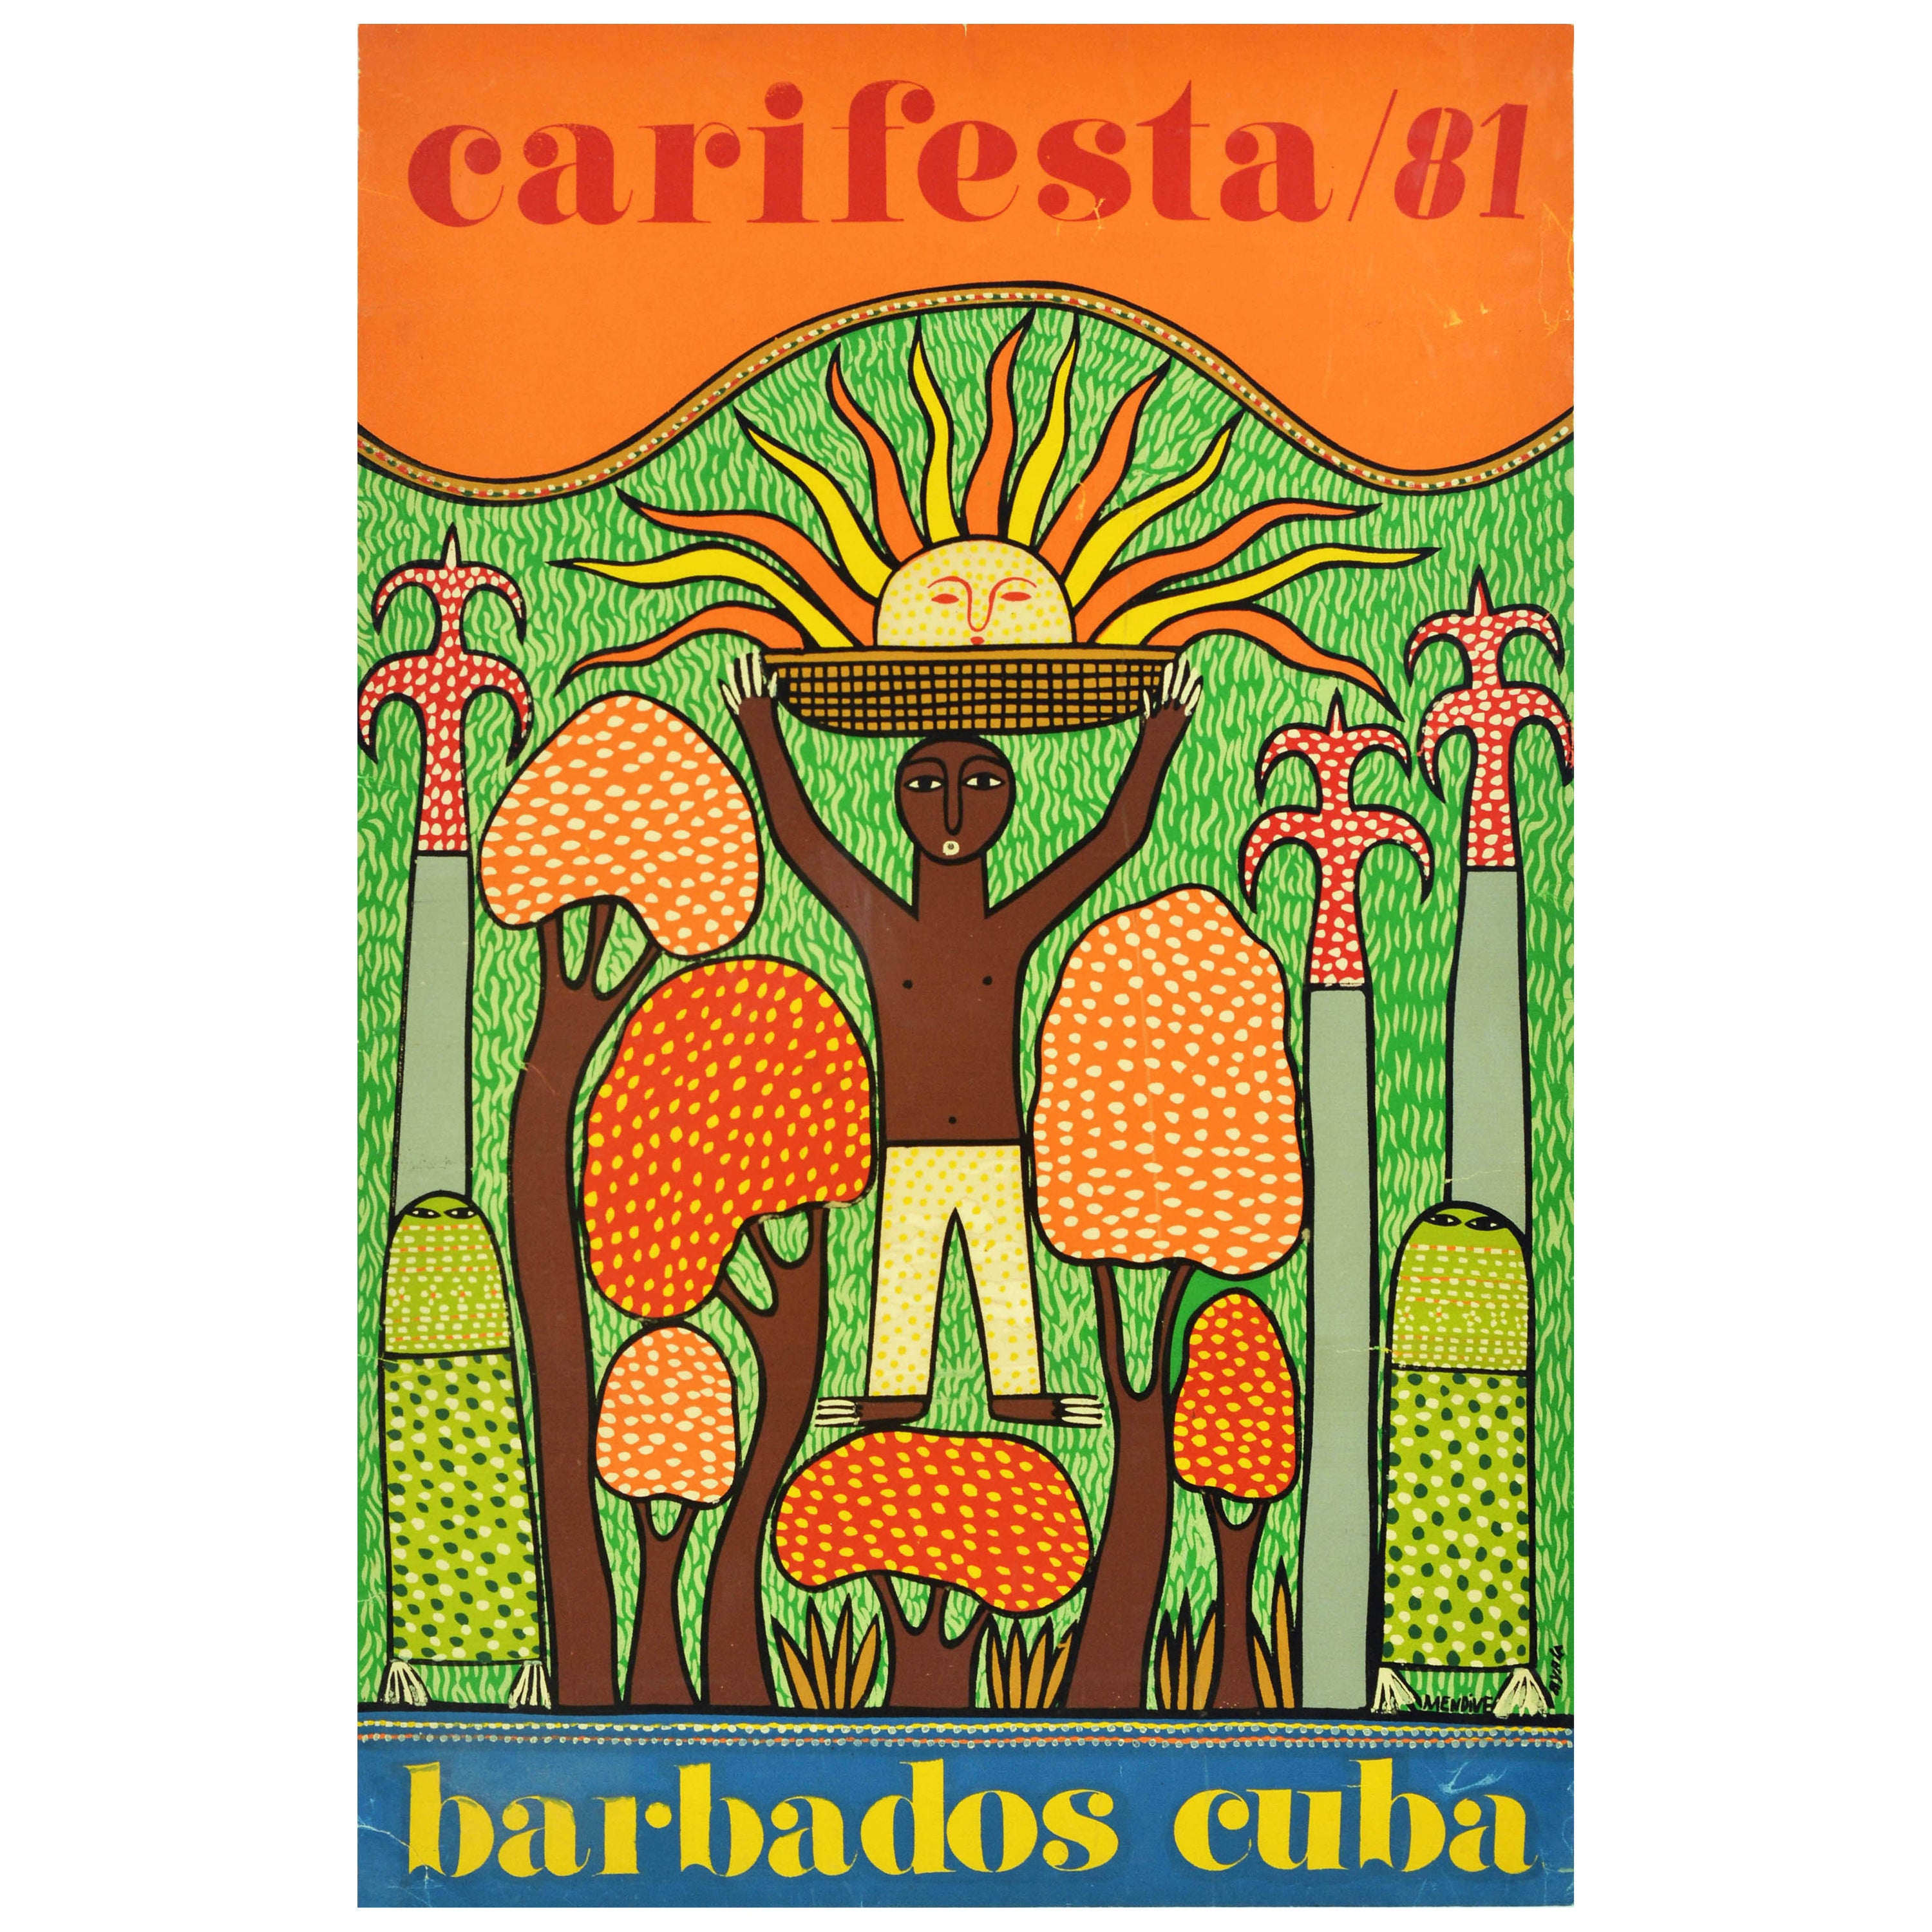 Original Vintage Poster Carifesta 81 Barbados Cuba Caribbean Art Culture Music  For Sale